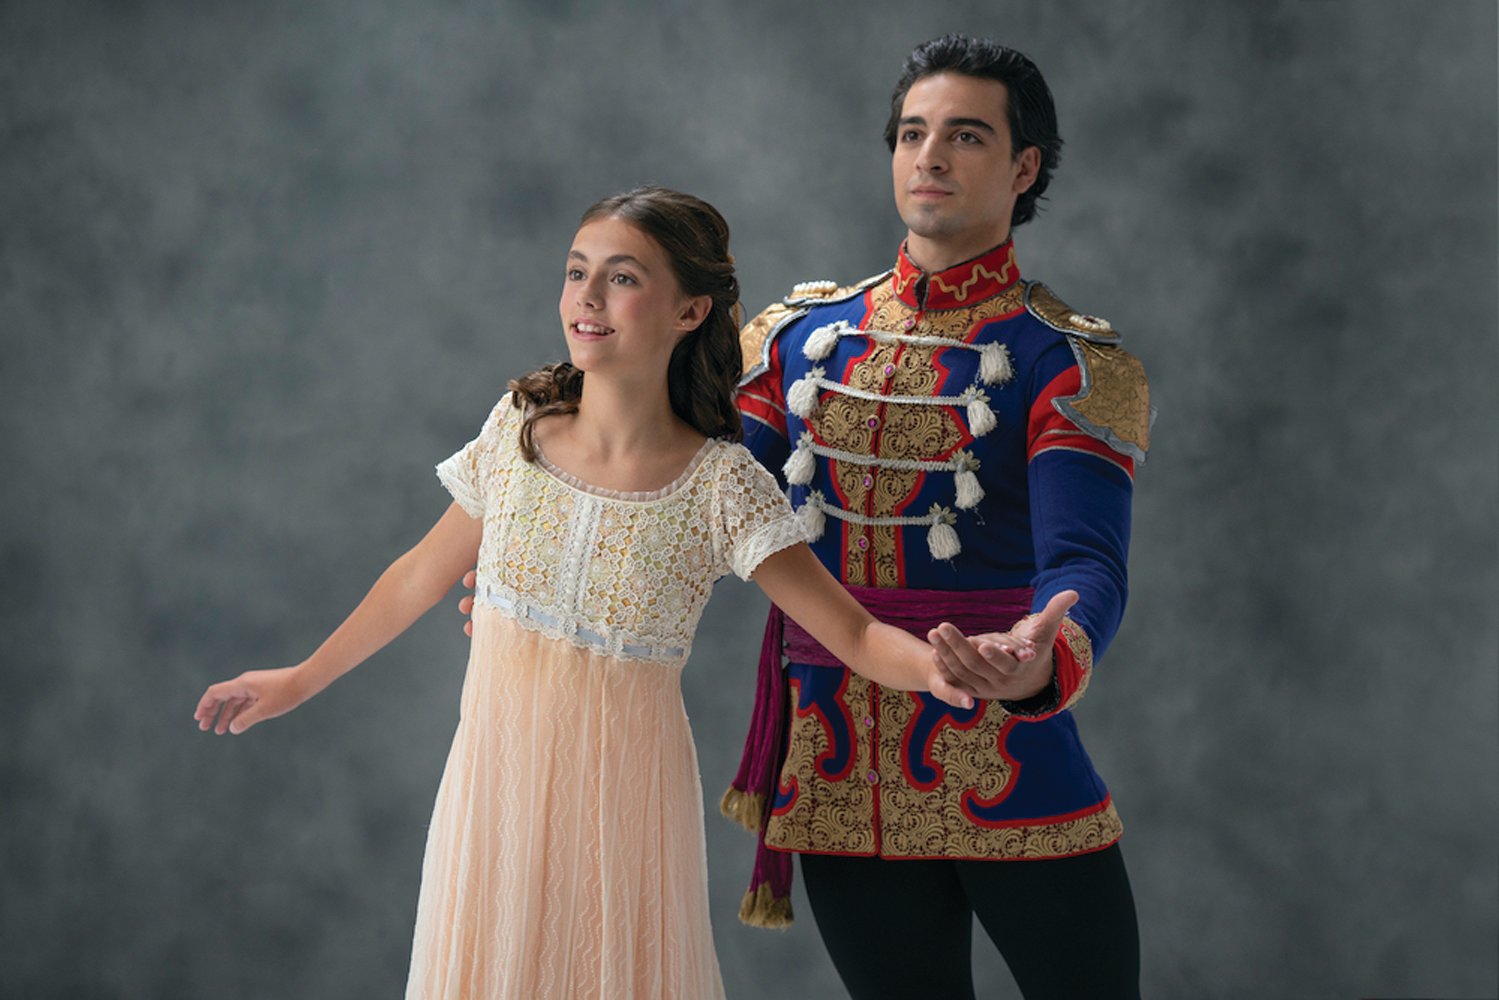 Cynthia Van Pelt, as Clara, and Mamuka Kikalishvili as the Nutcracker Prince